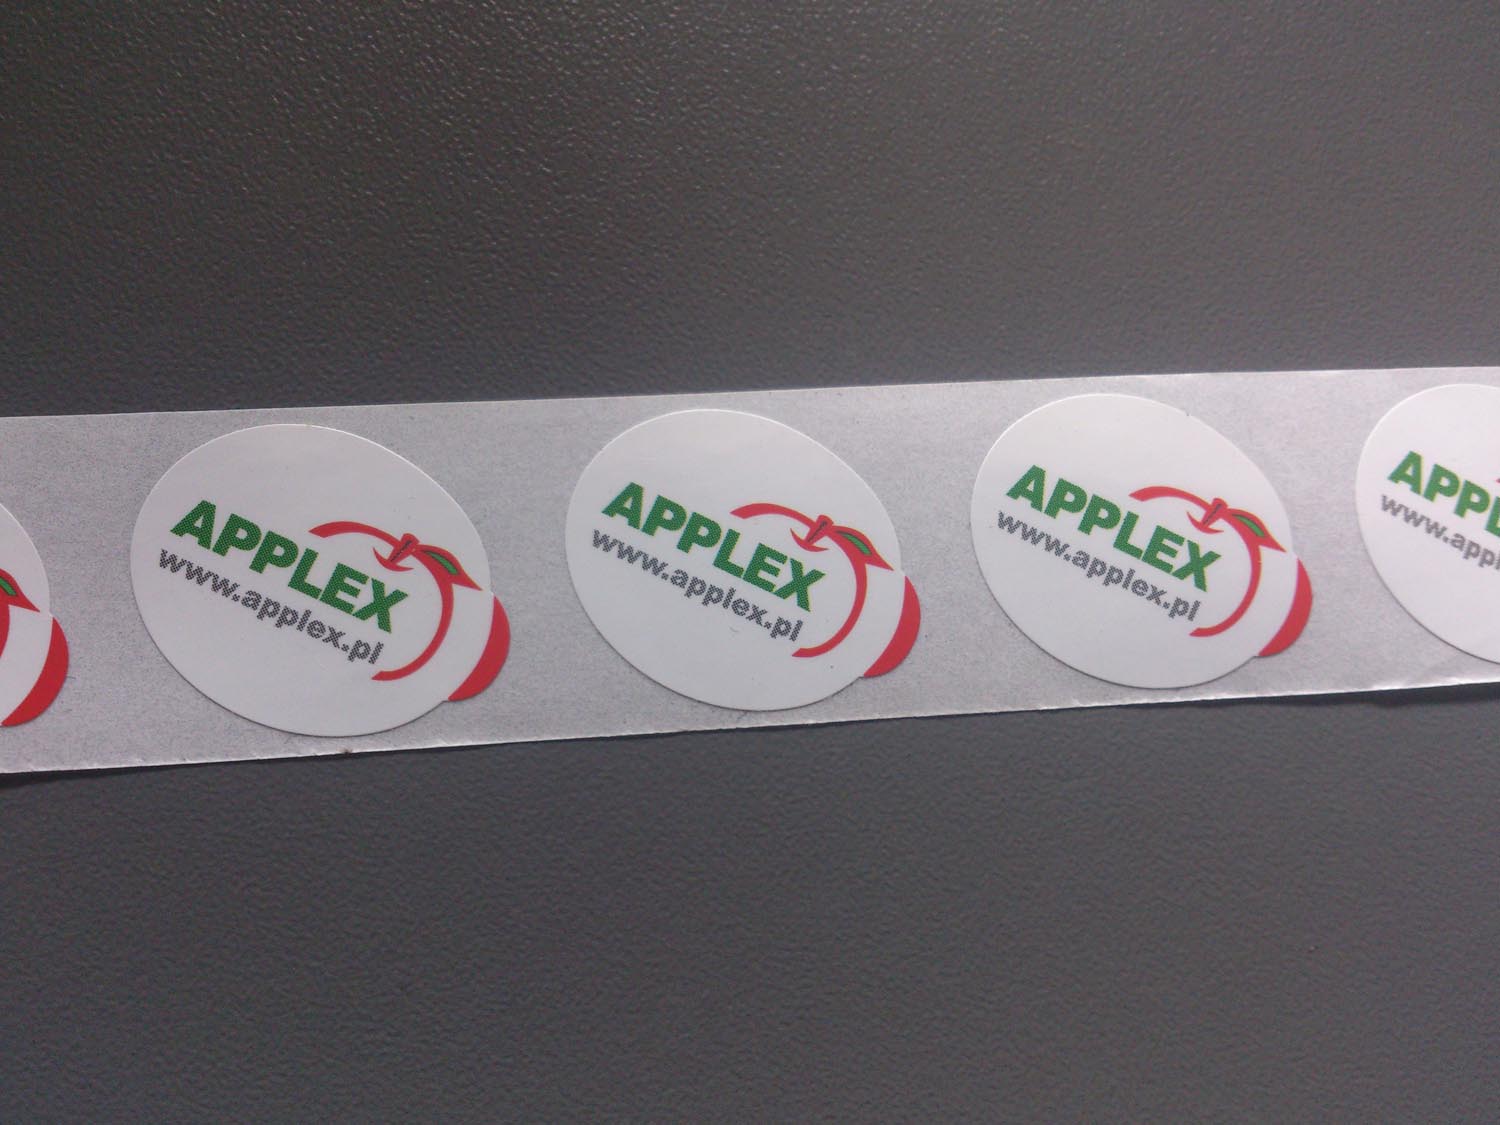 1 stickery Applex